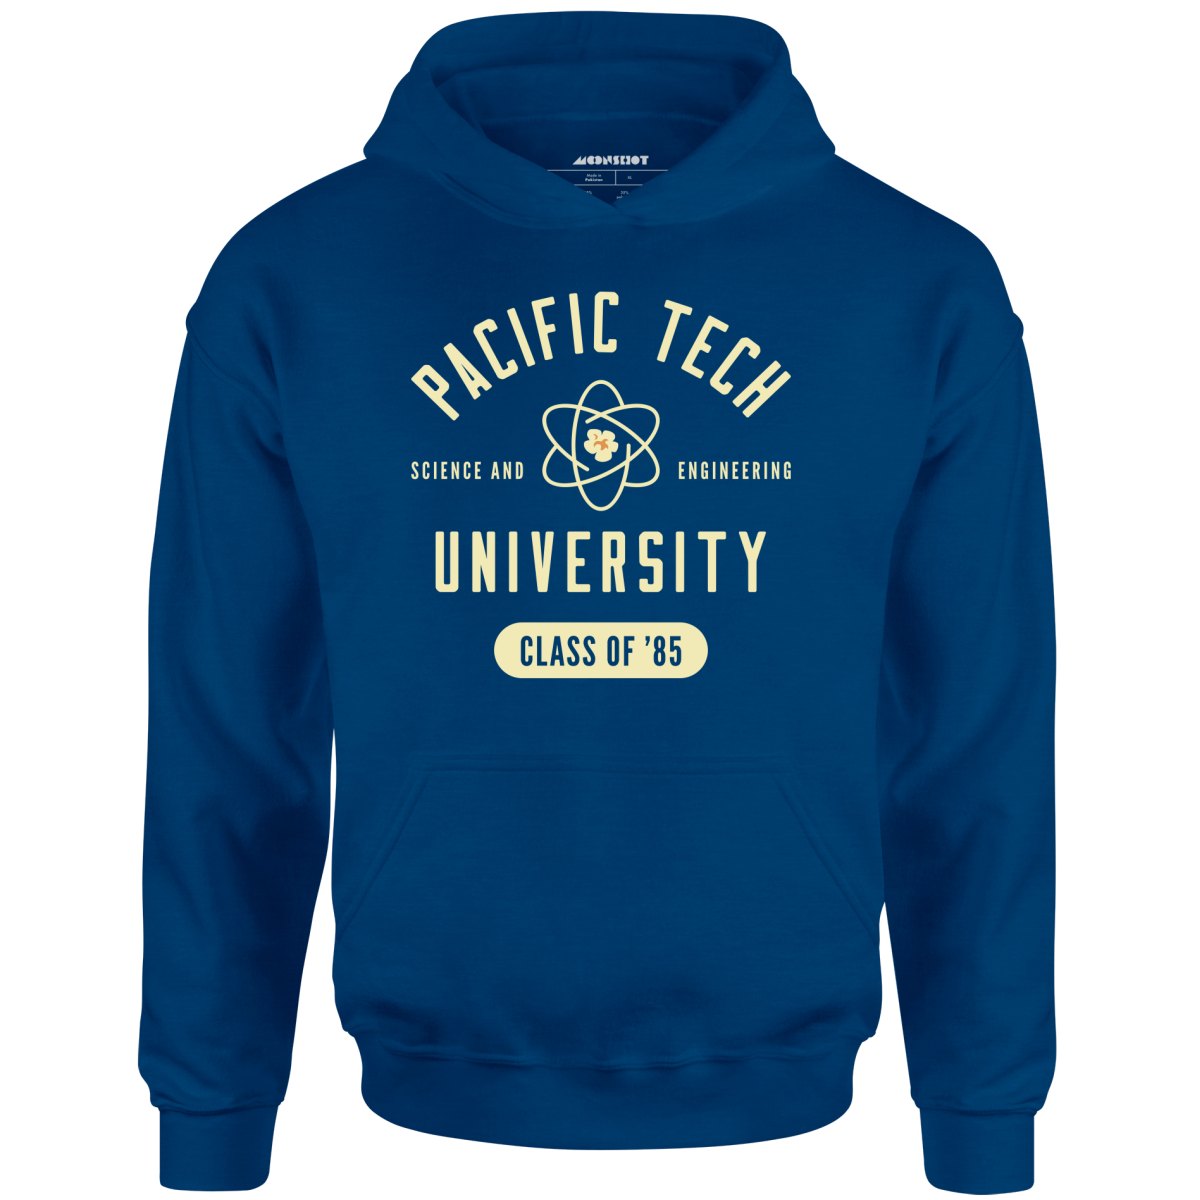 Real Genius - Pacific Tech University - Unisex Hoodie